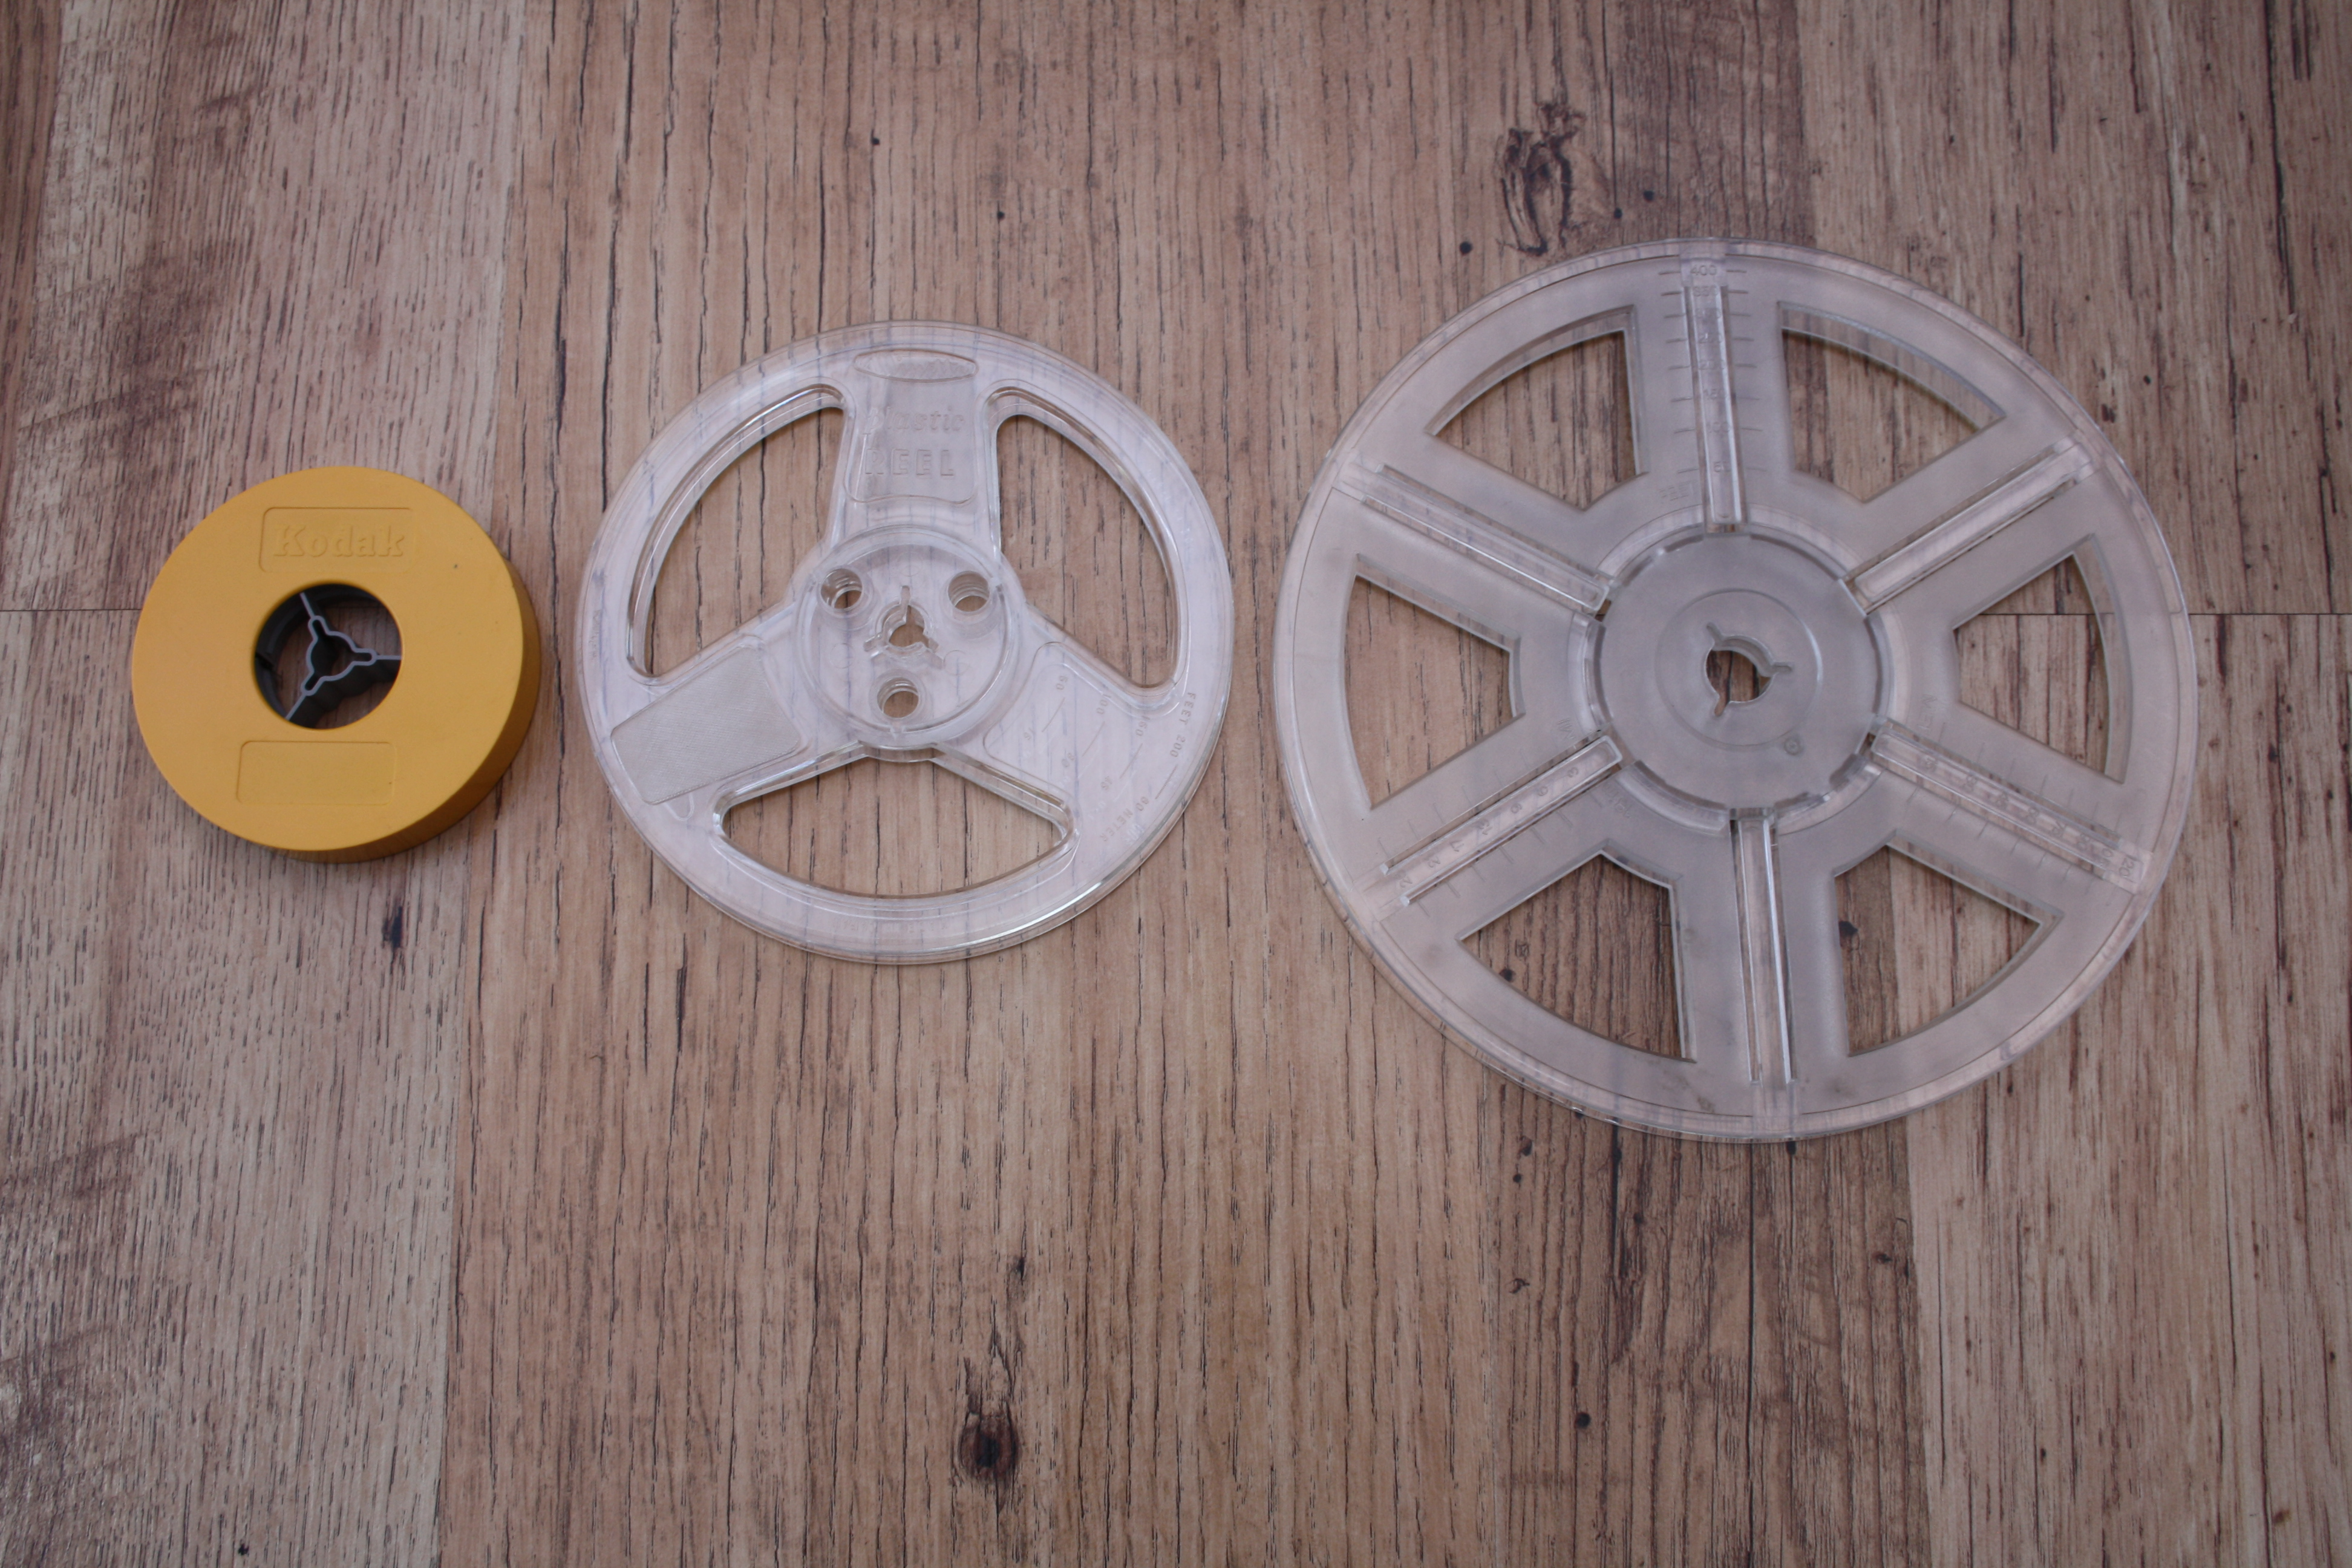 8mm film transfers to DVD - The Cine Film Factory